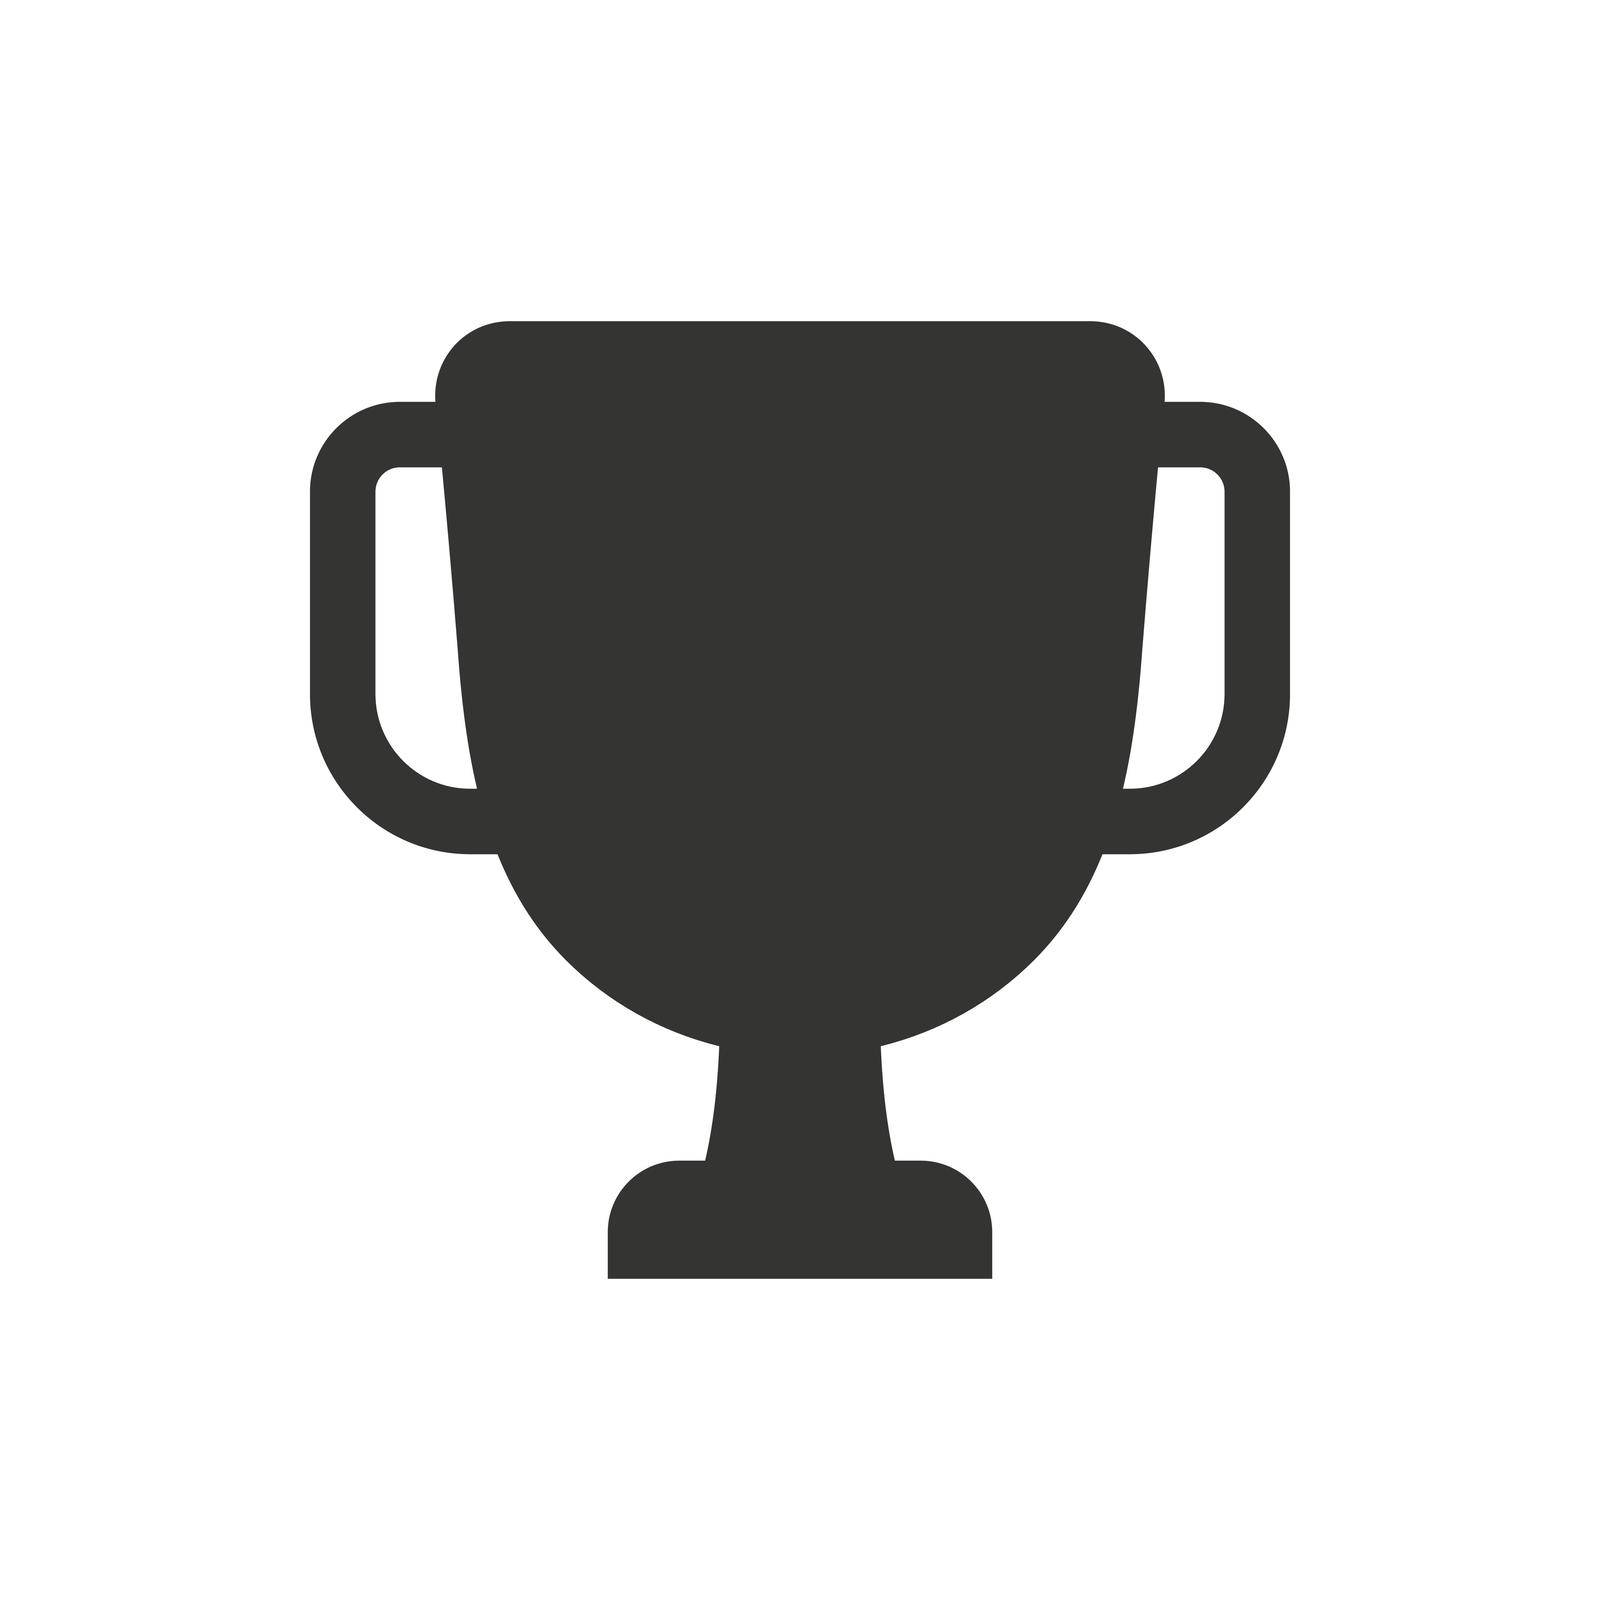 Award Trophy icon. Vector EPS file.